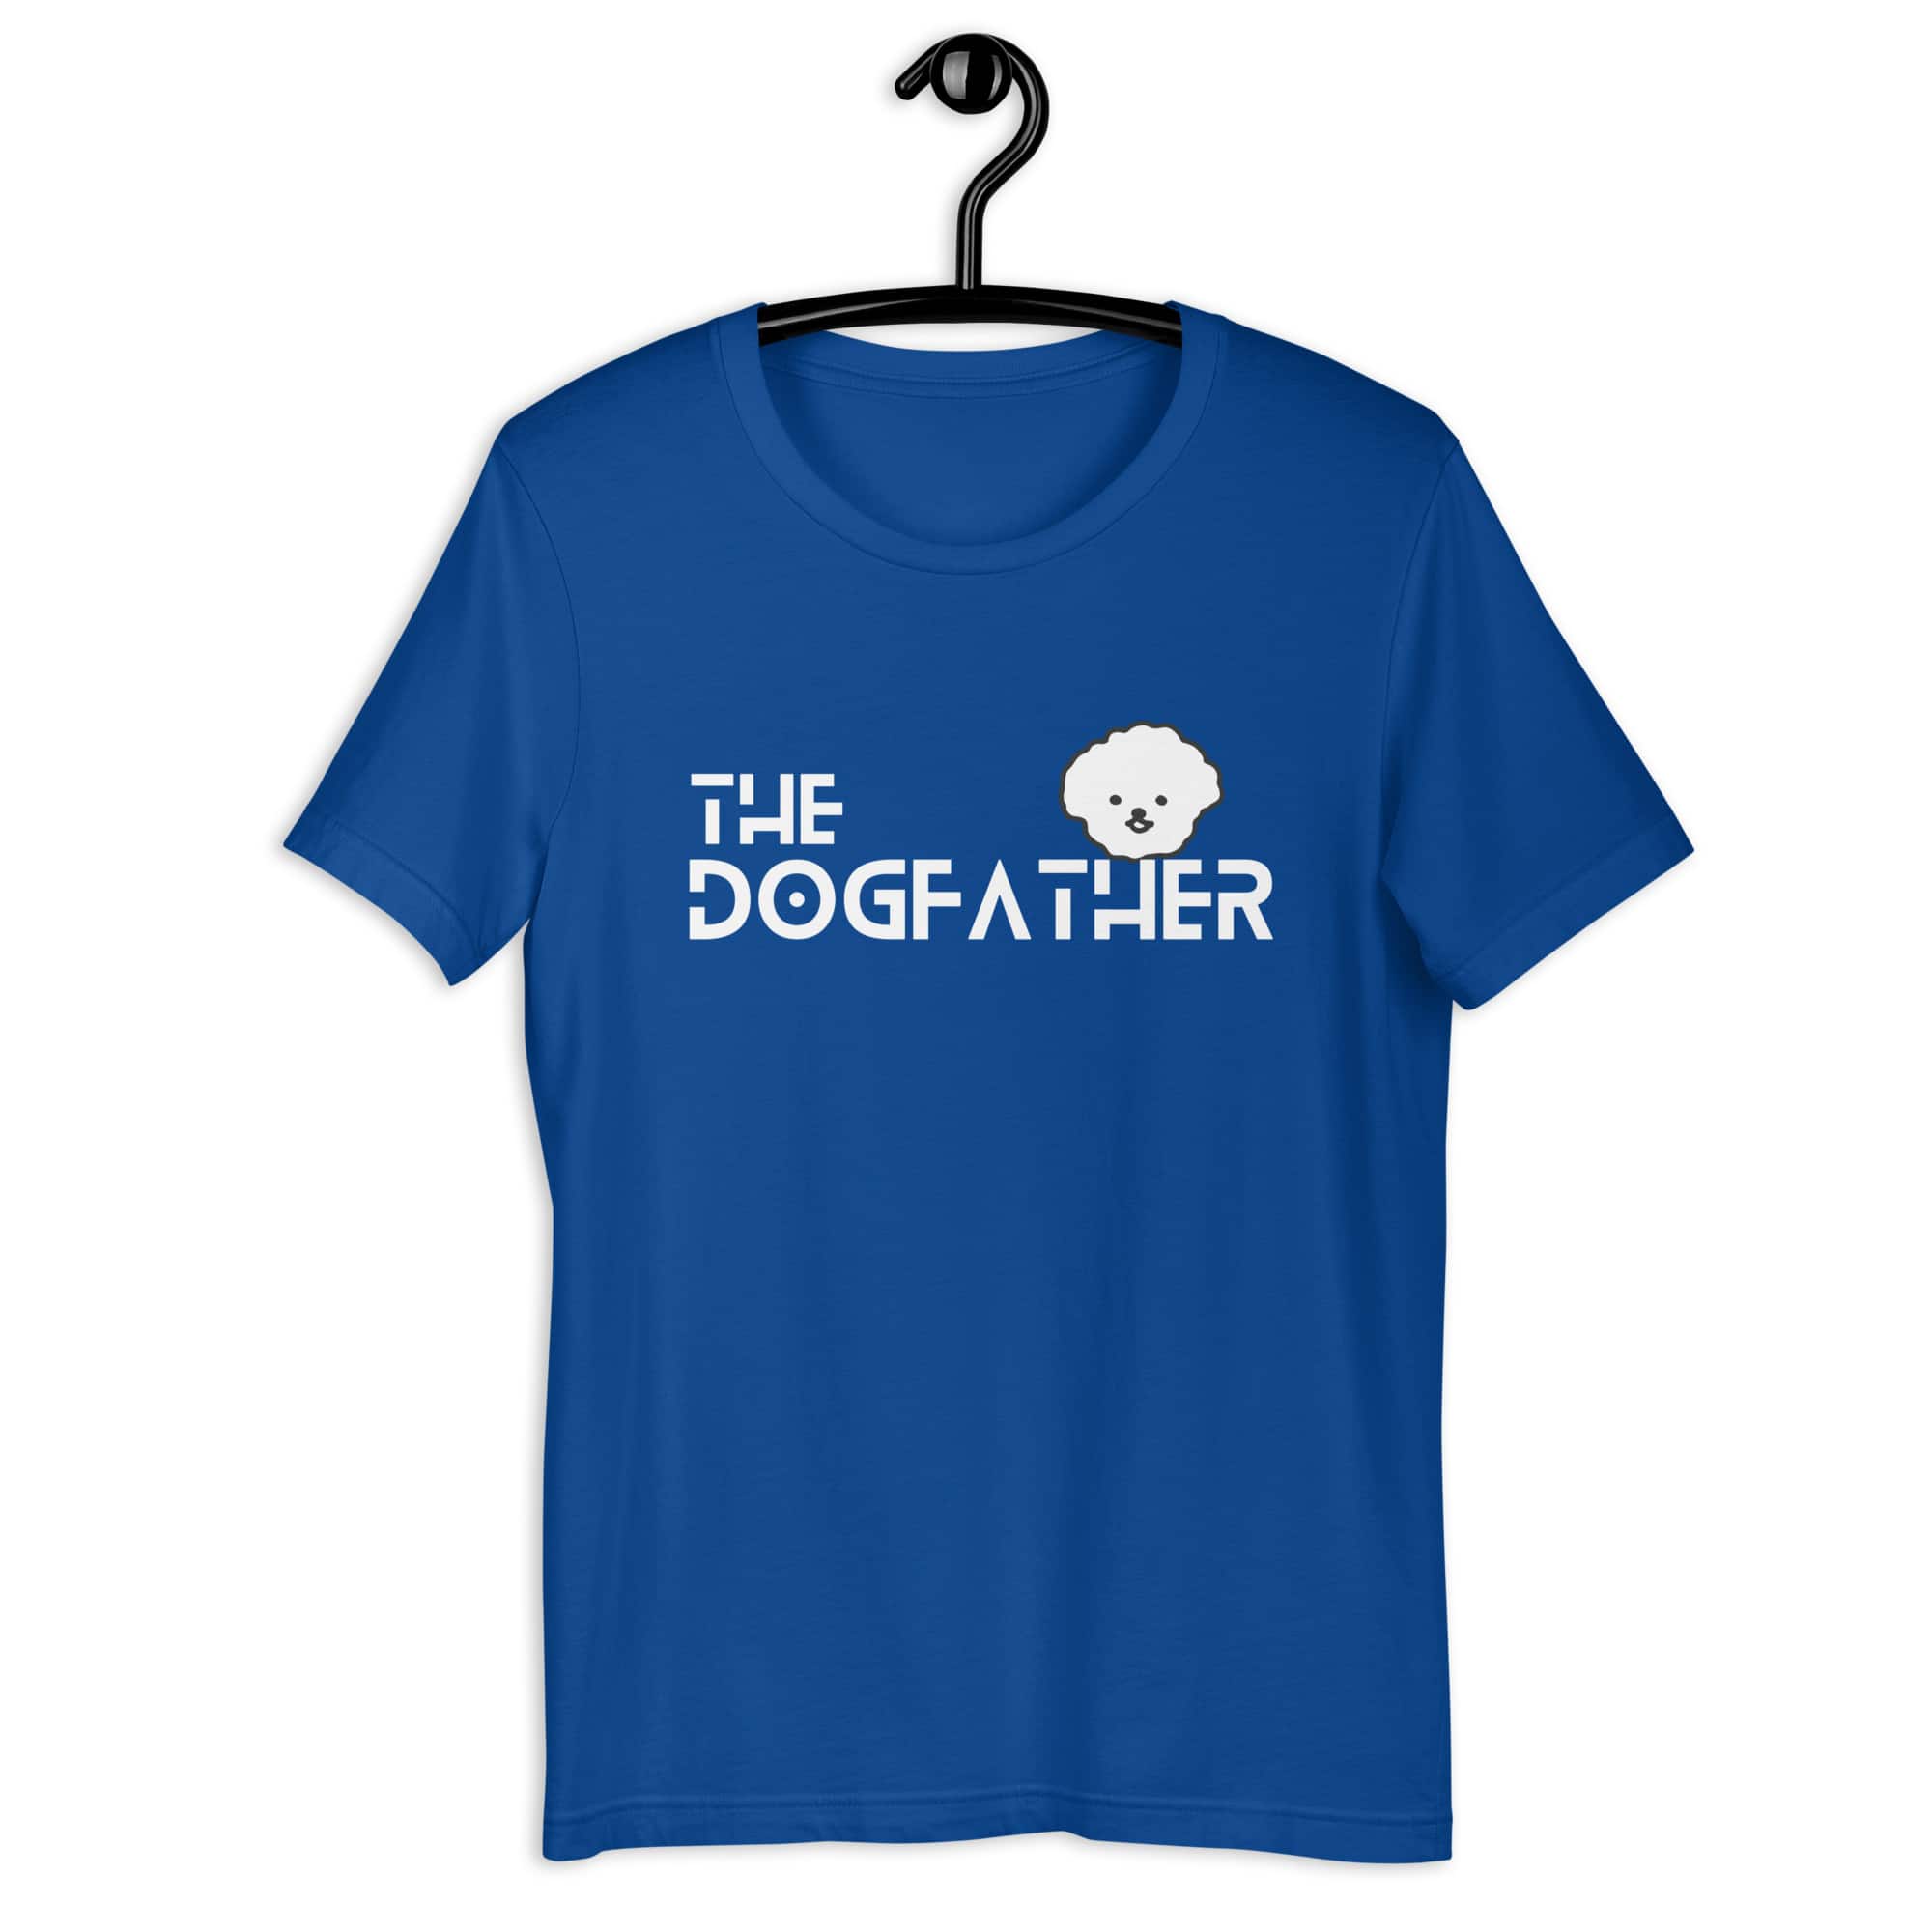 The Dogfather Poodles Unisex T-Shirt. Royal Blue